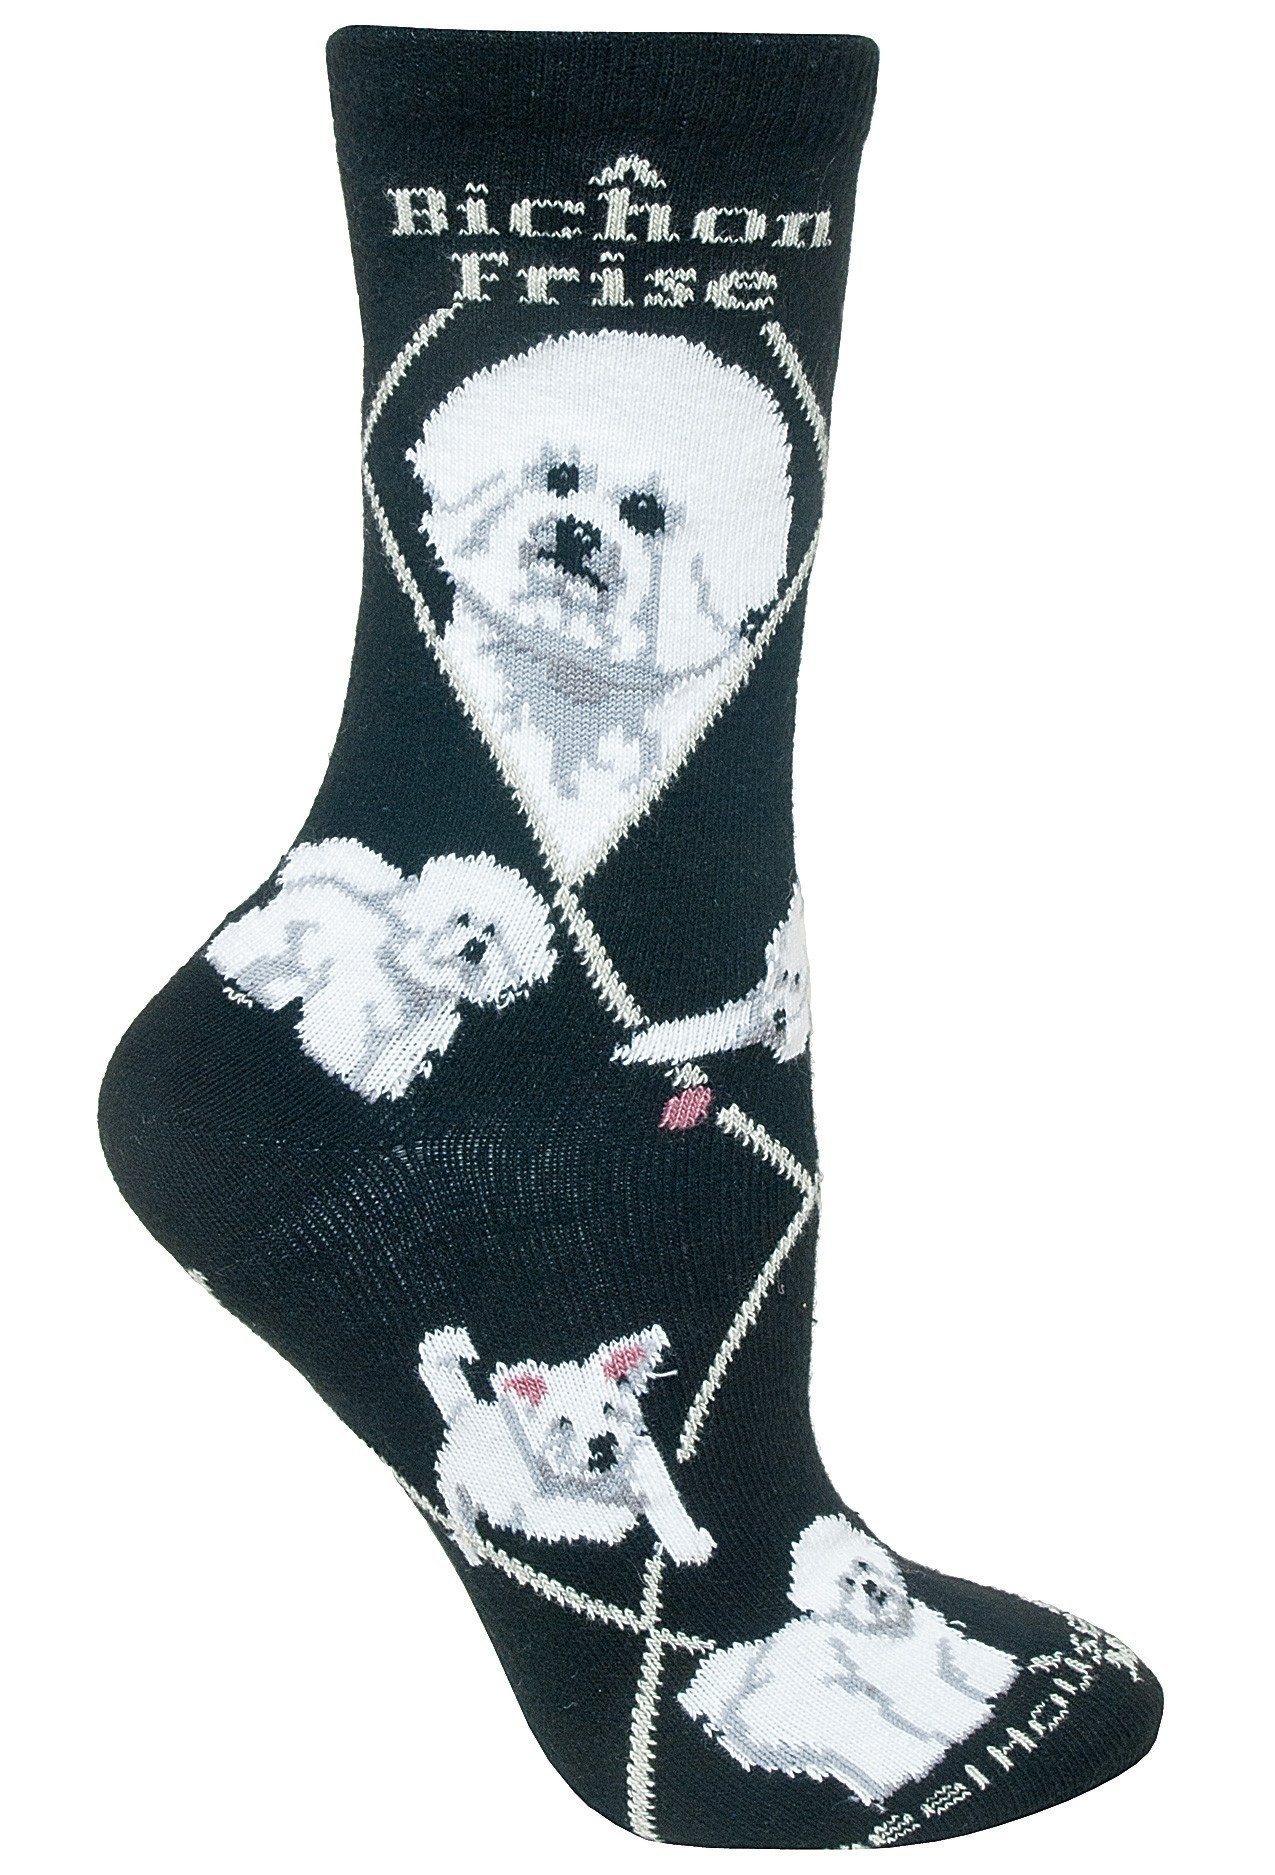 Bichon Frise Sock on Black Size 9-11